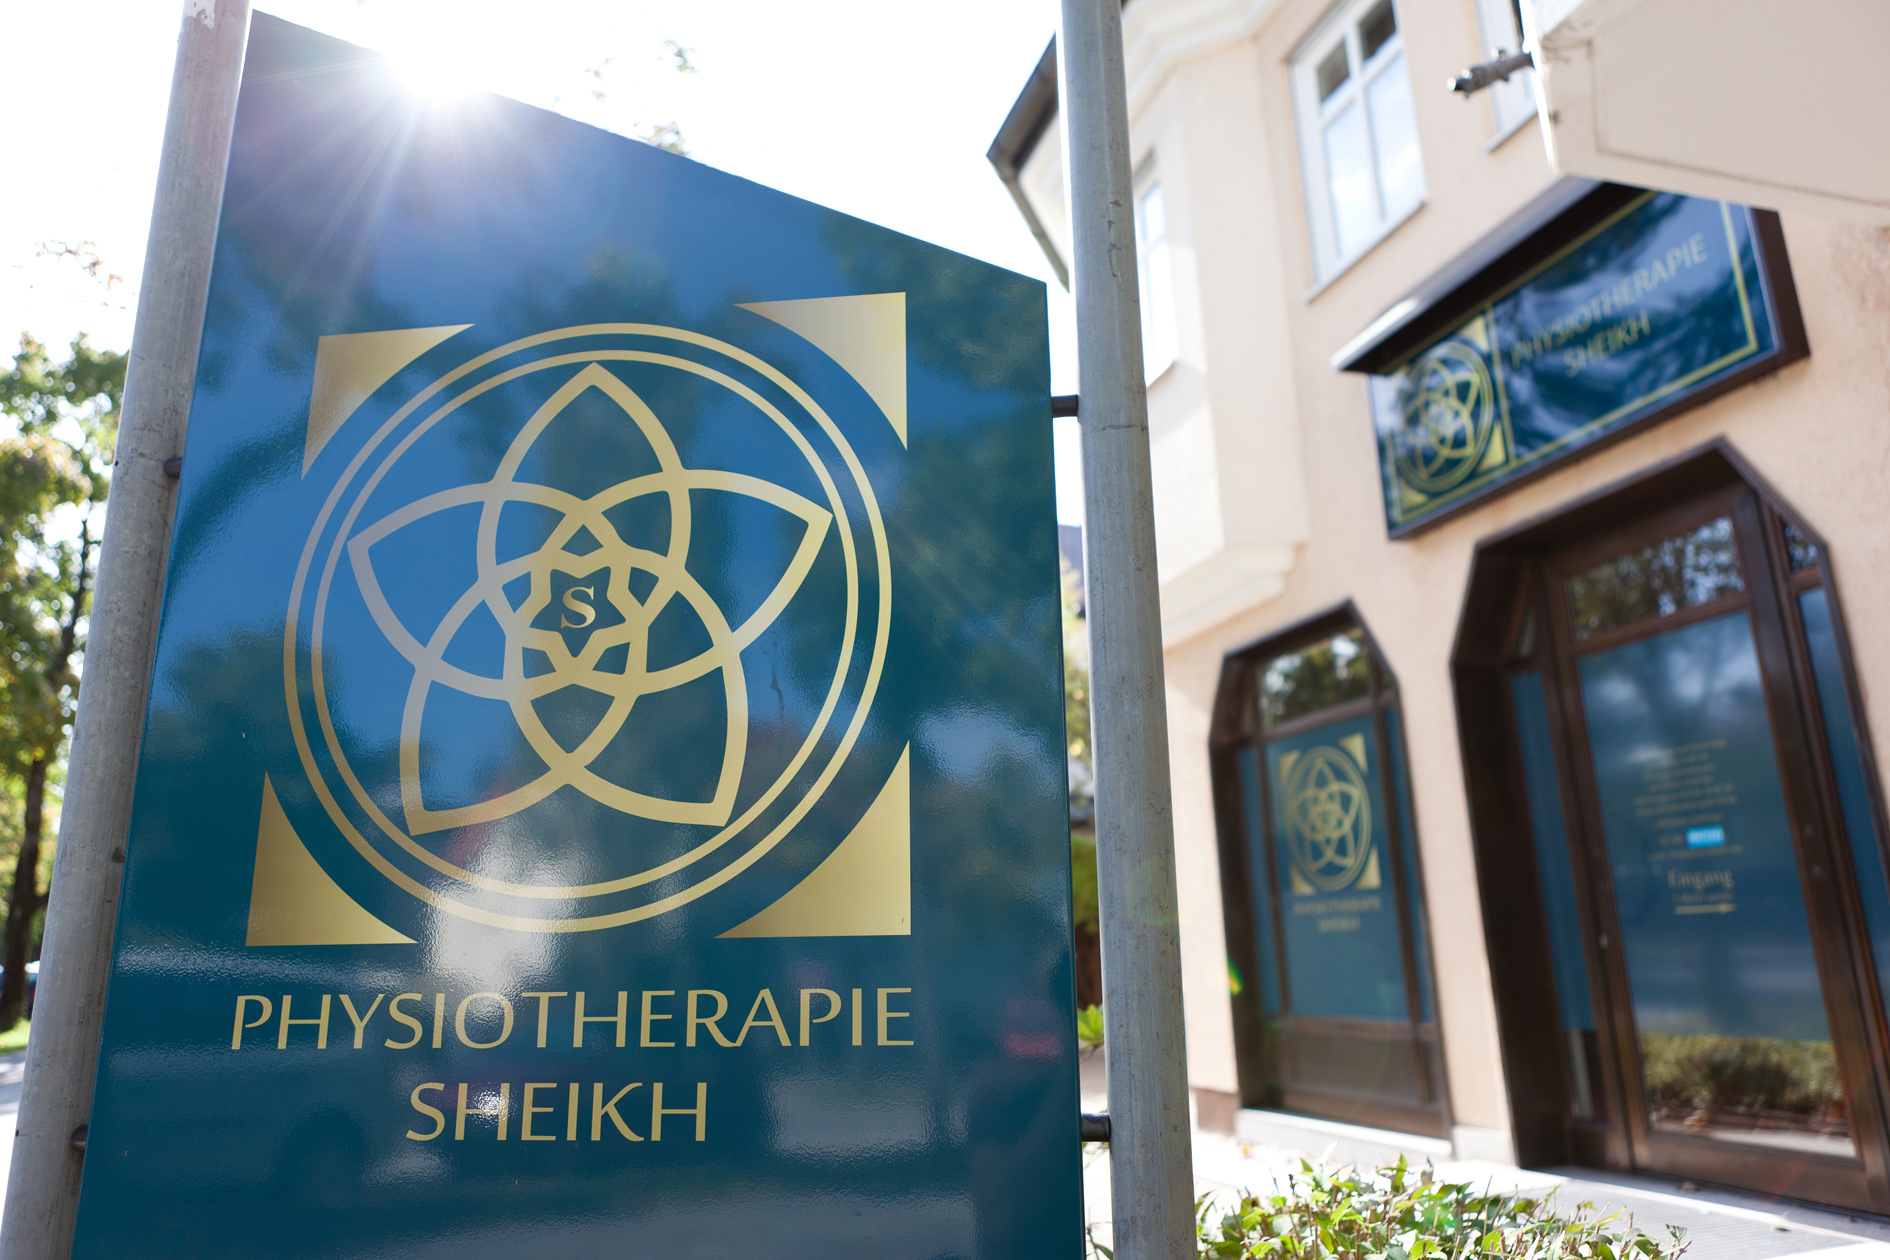 Physiotherapie in München Laim